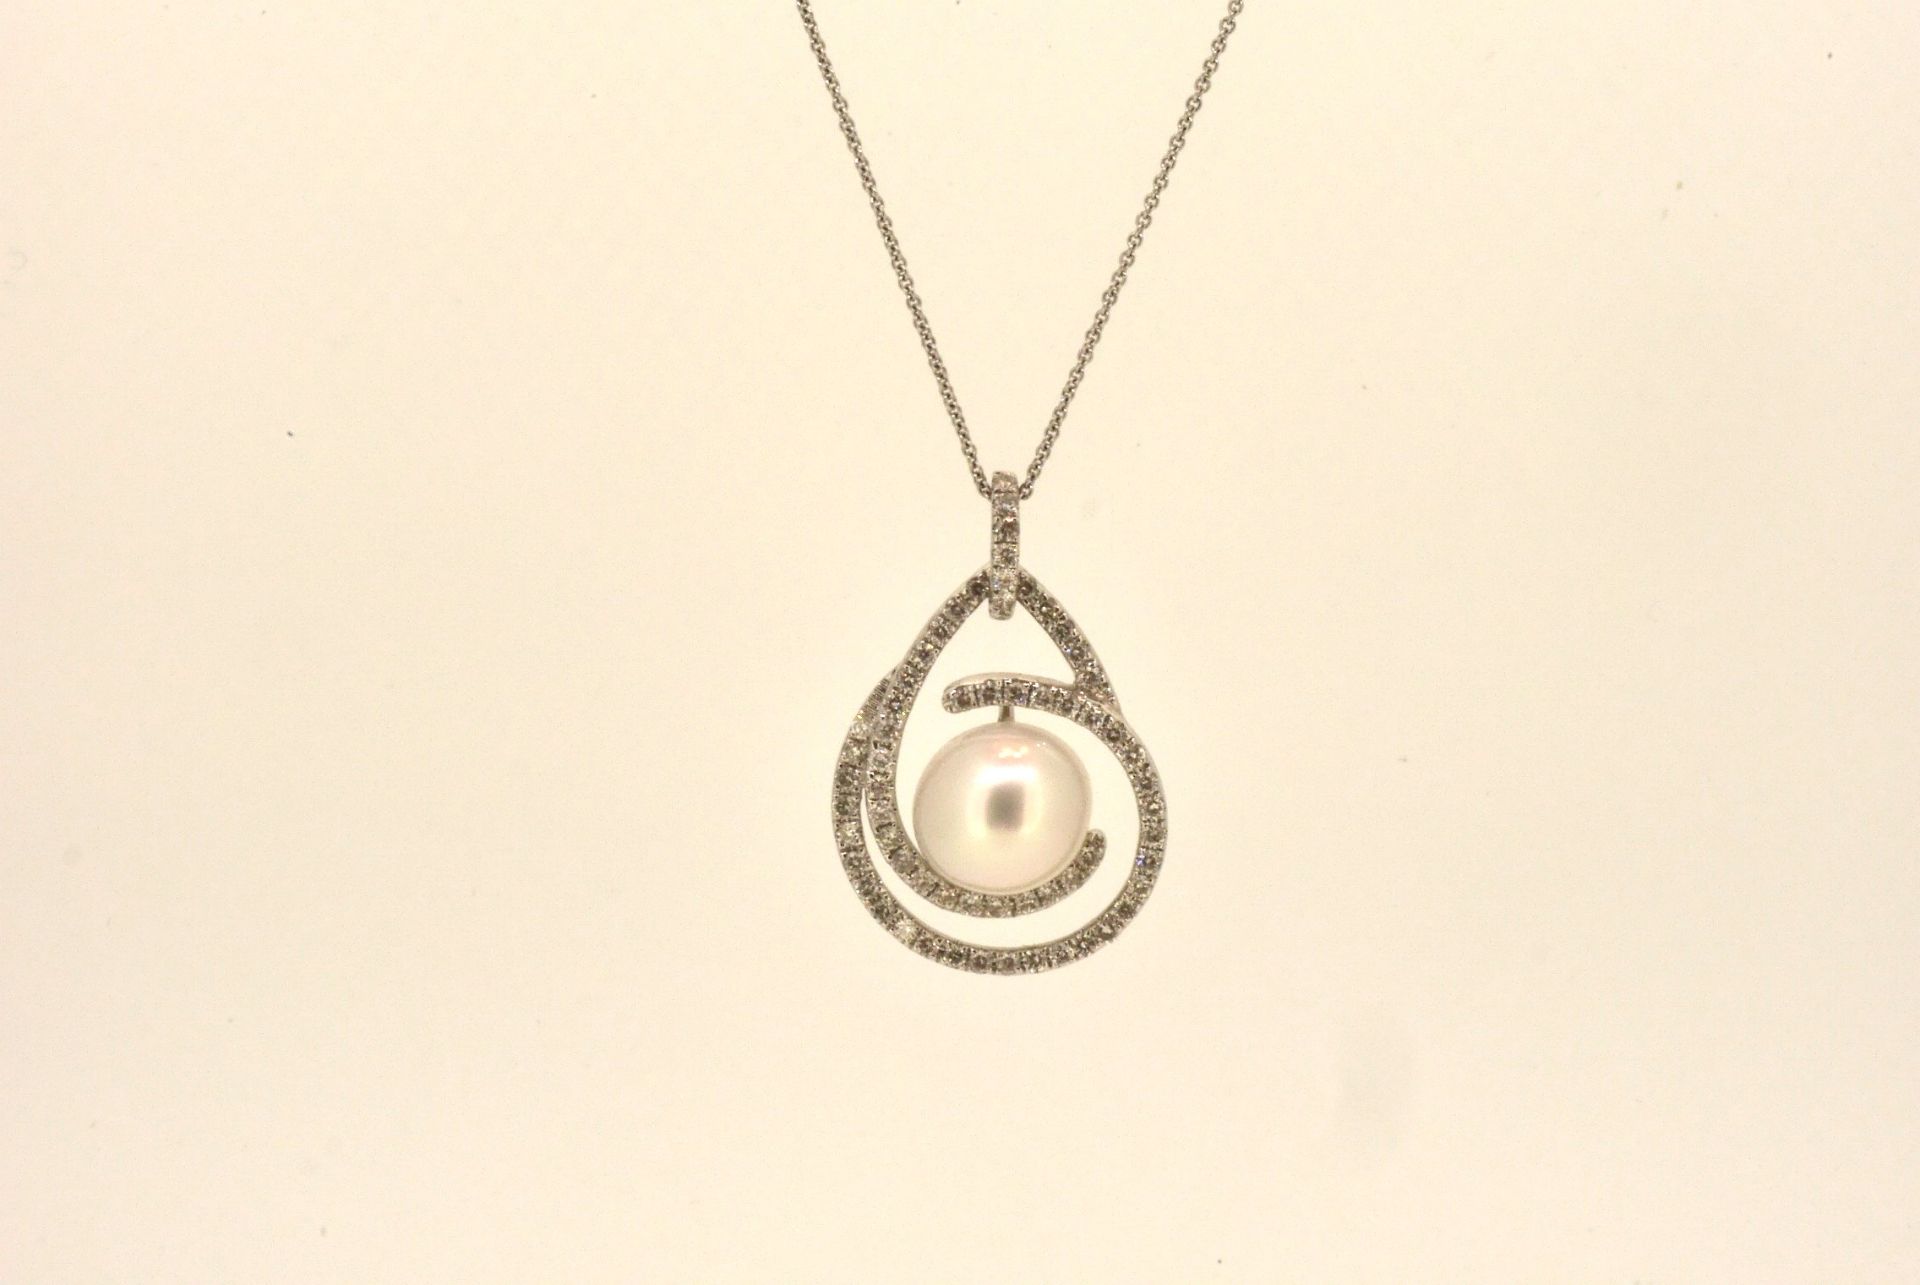 Collier WG 750, Diamanten ca. 0.70 ct, Südsee-Perle, 48 cm